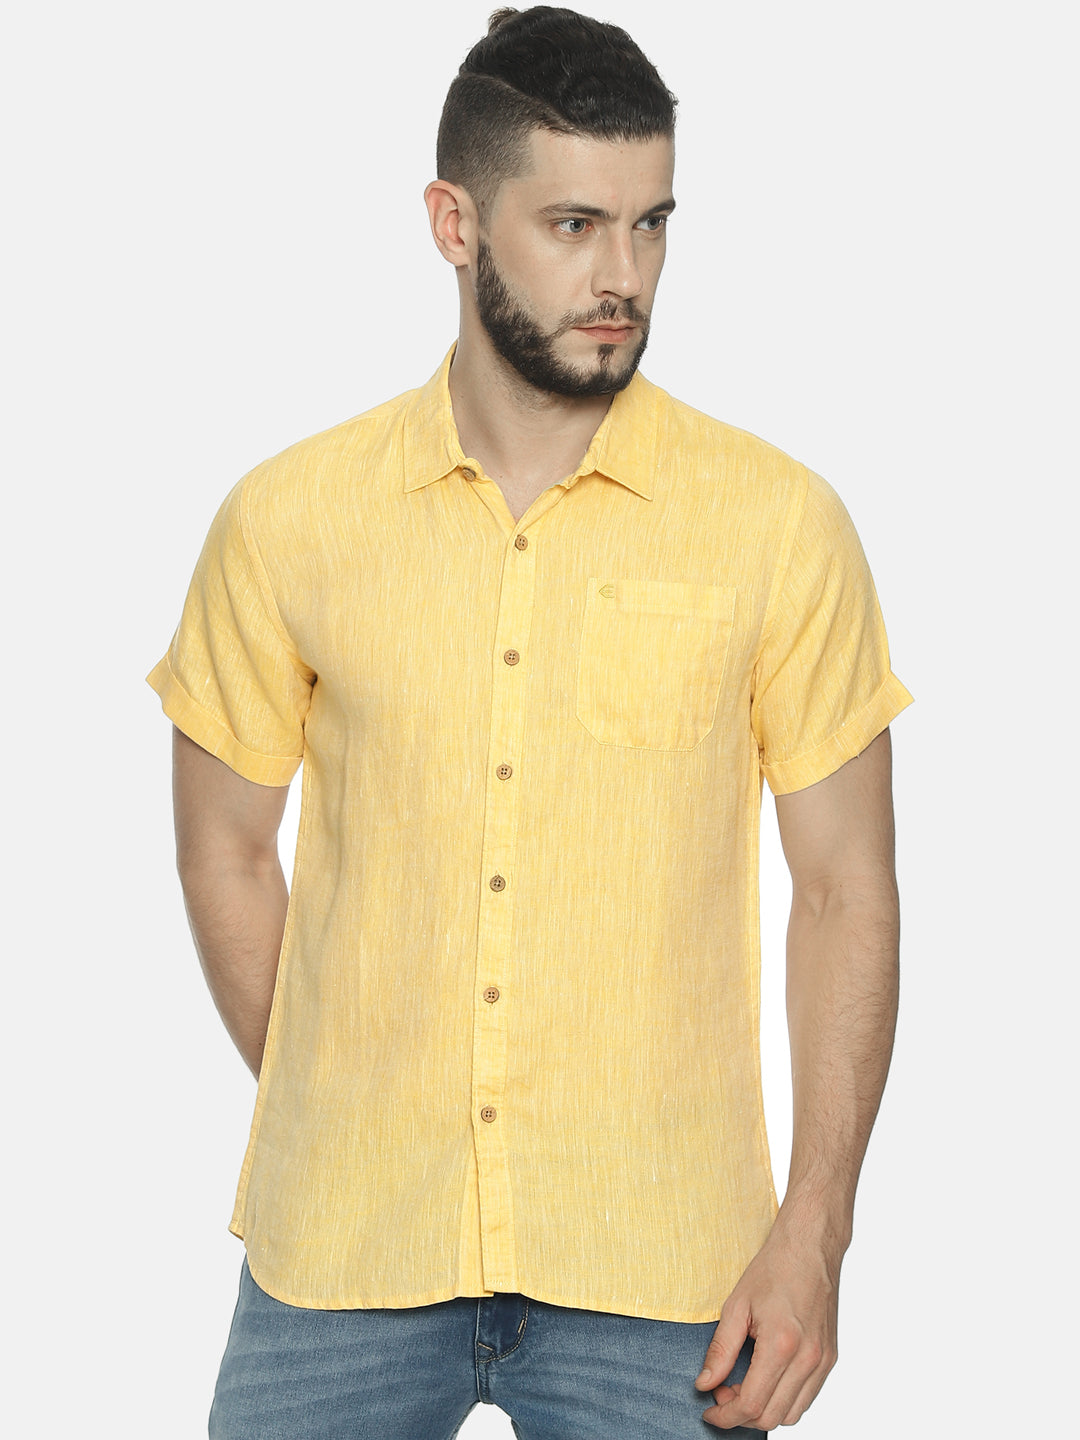 Lemon Yellow Casual Half Sleeves Hemp Shirt For Men | Ecentric